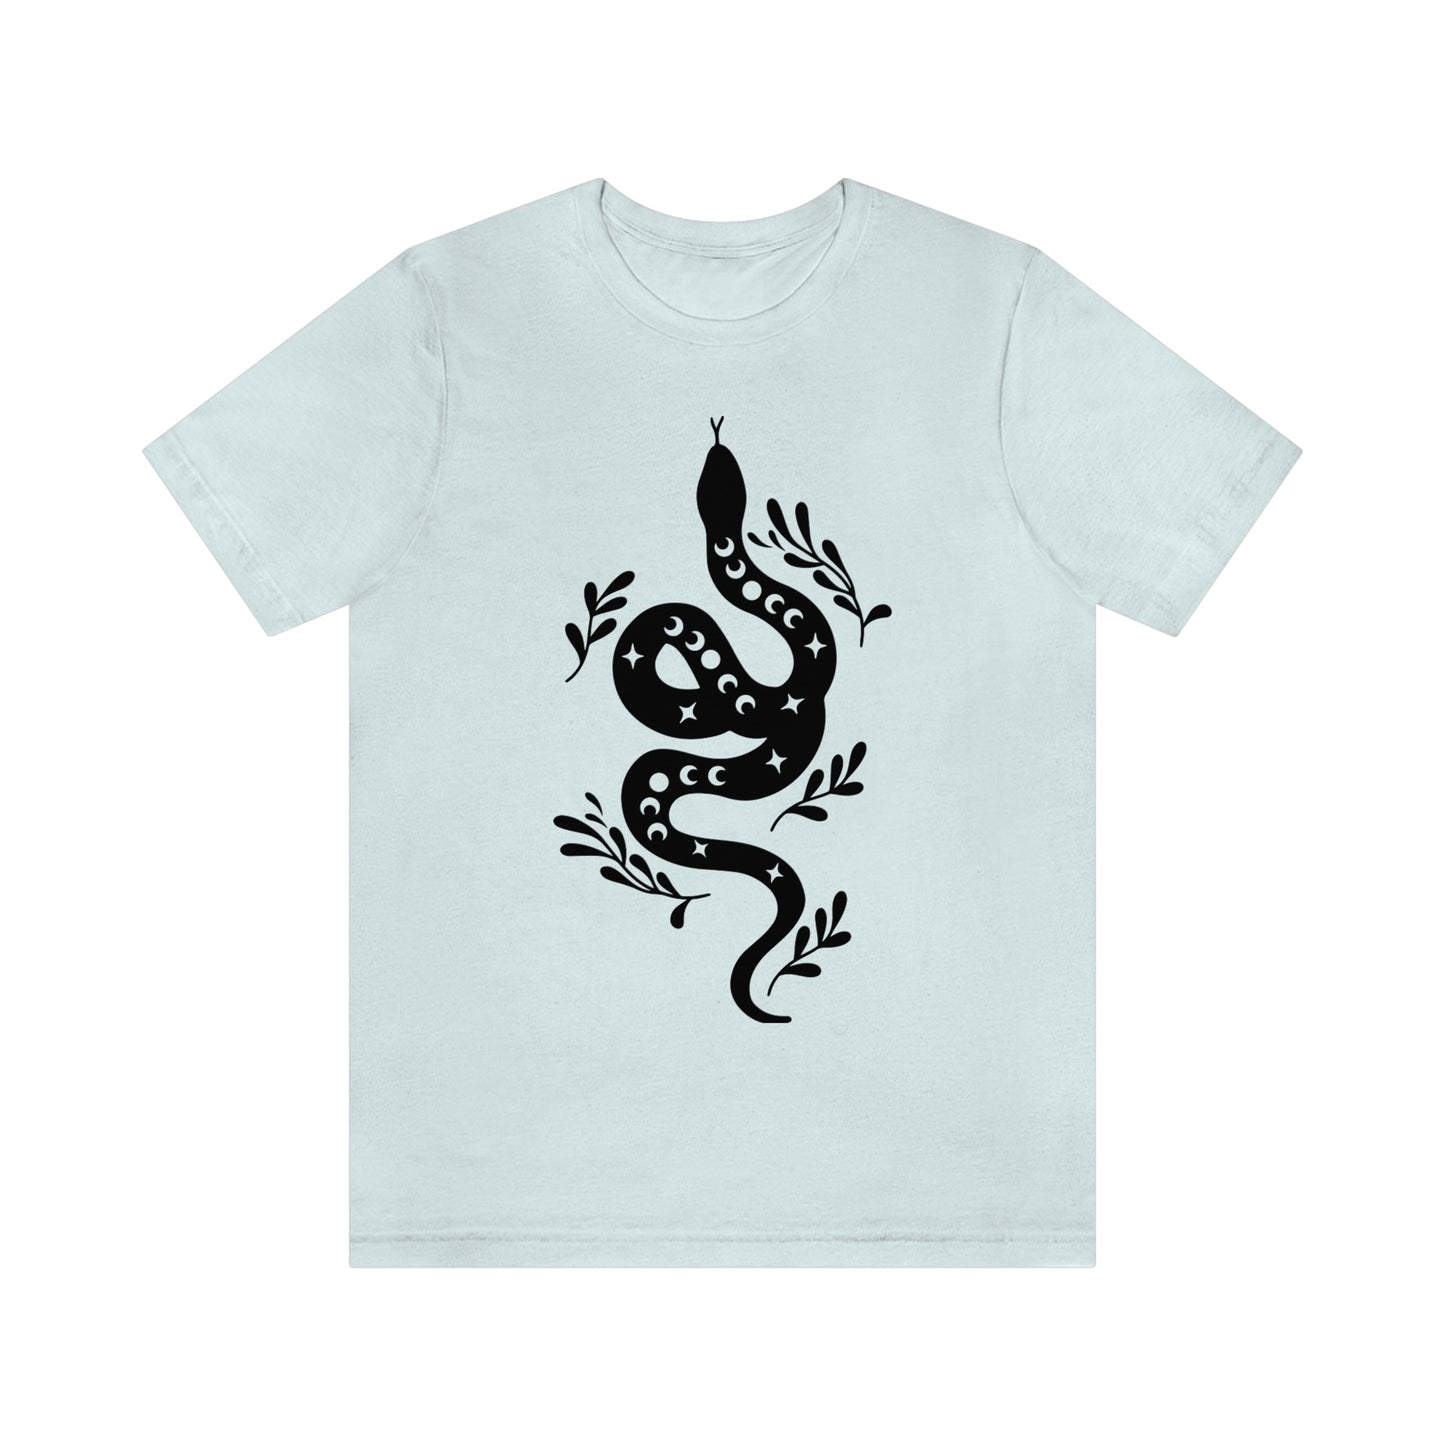 Celestial Snake Tee Shirt, Unisex Jersey Short Sleeve Tee